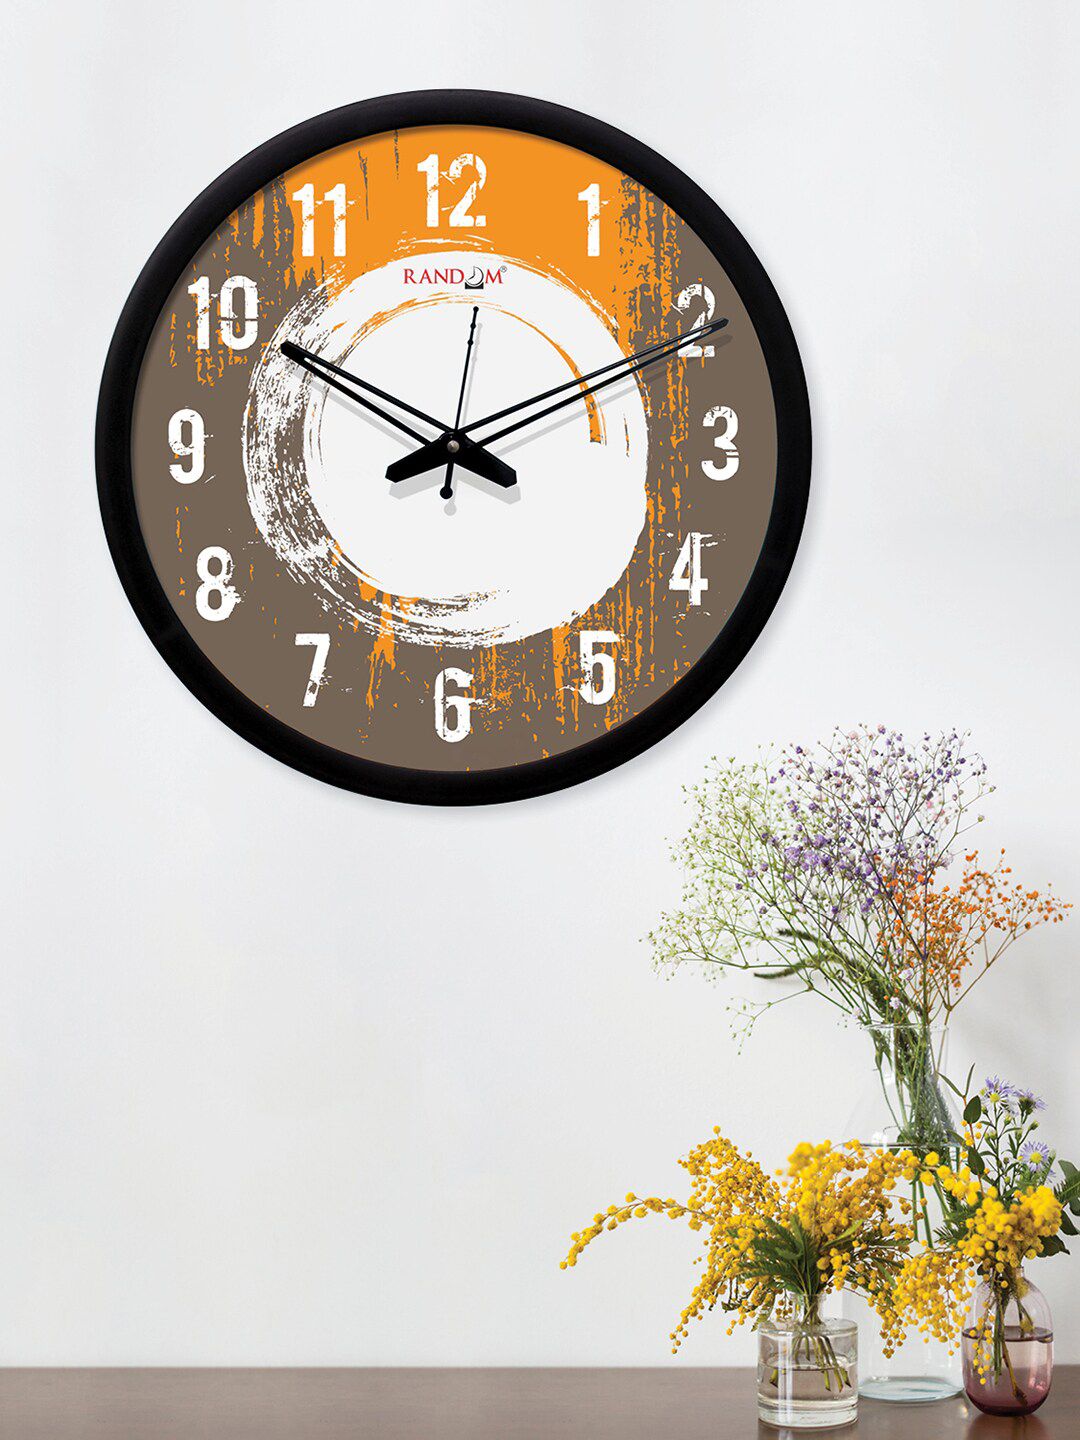 RANDOM Mustard Yellow & Grey Round Printed Analogue Wall Clock (30.48 cm x 30.48 cm) Price in India